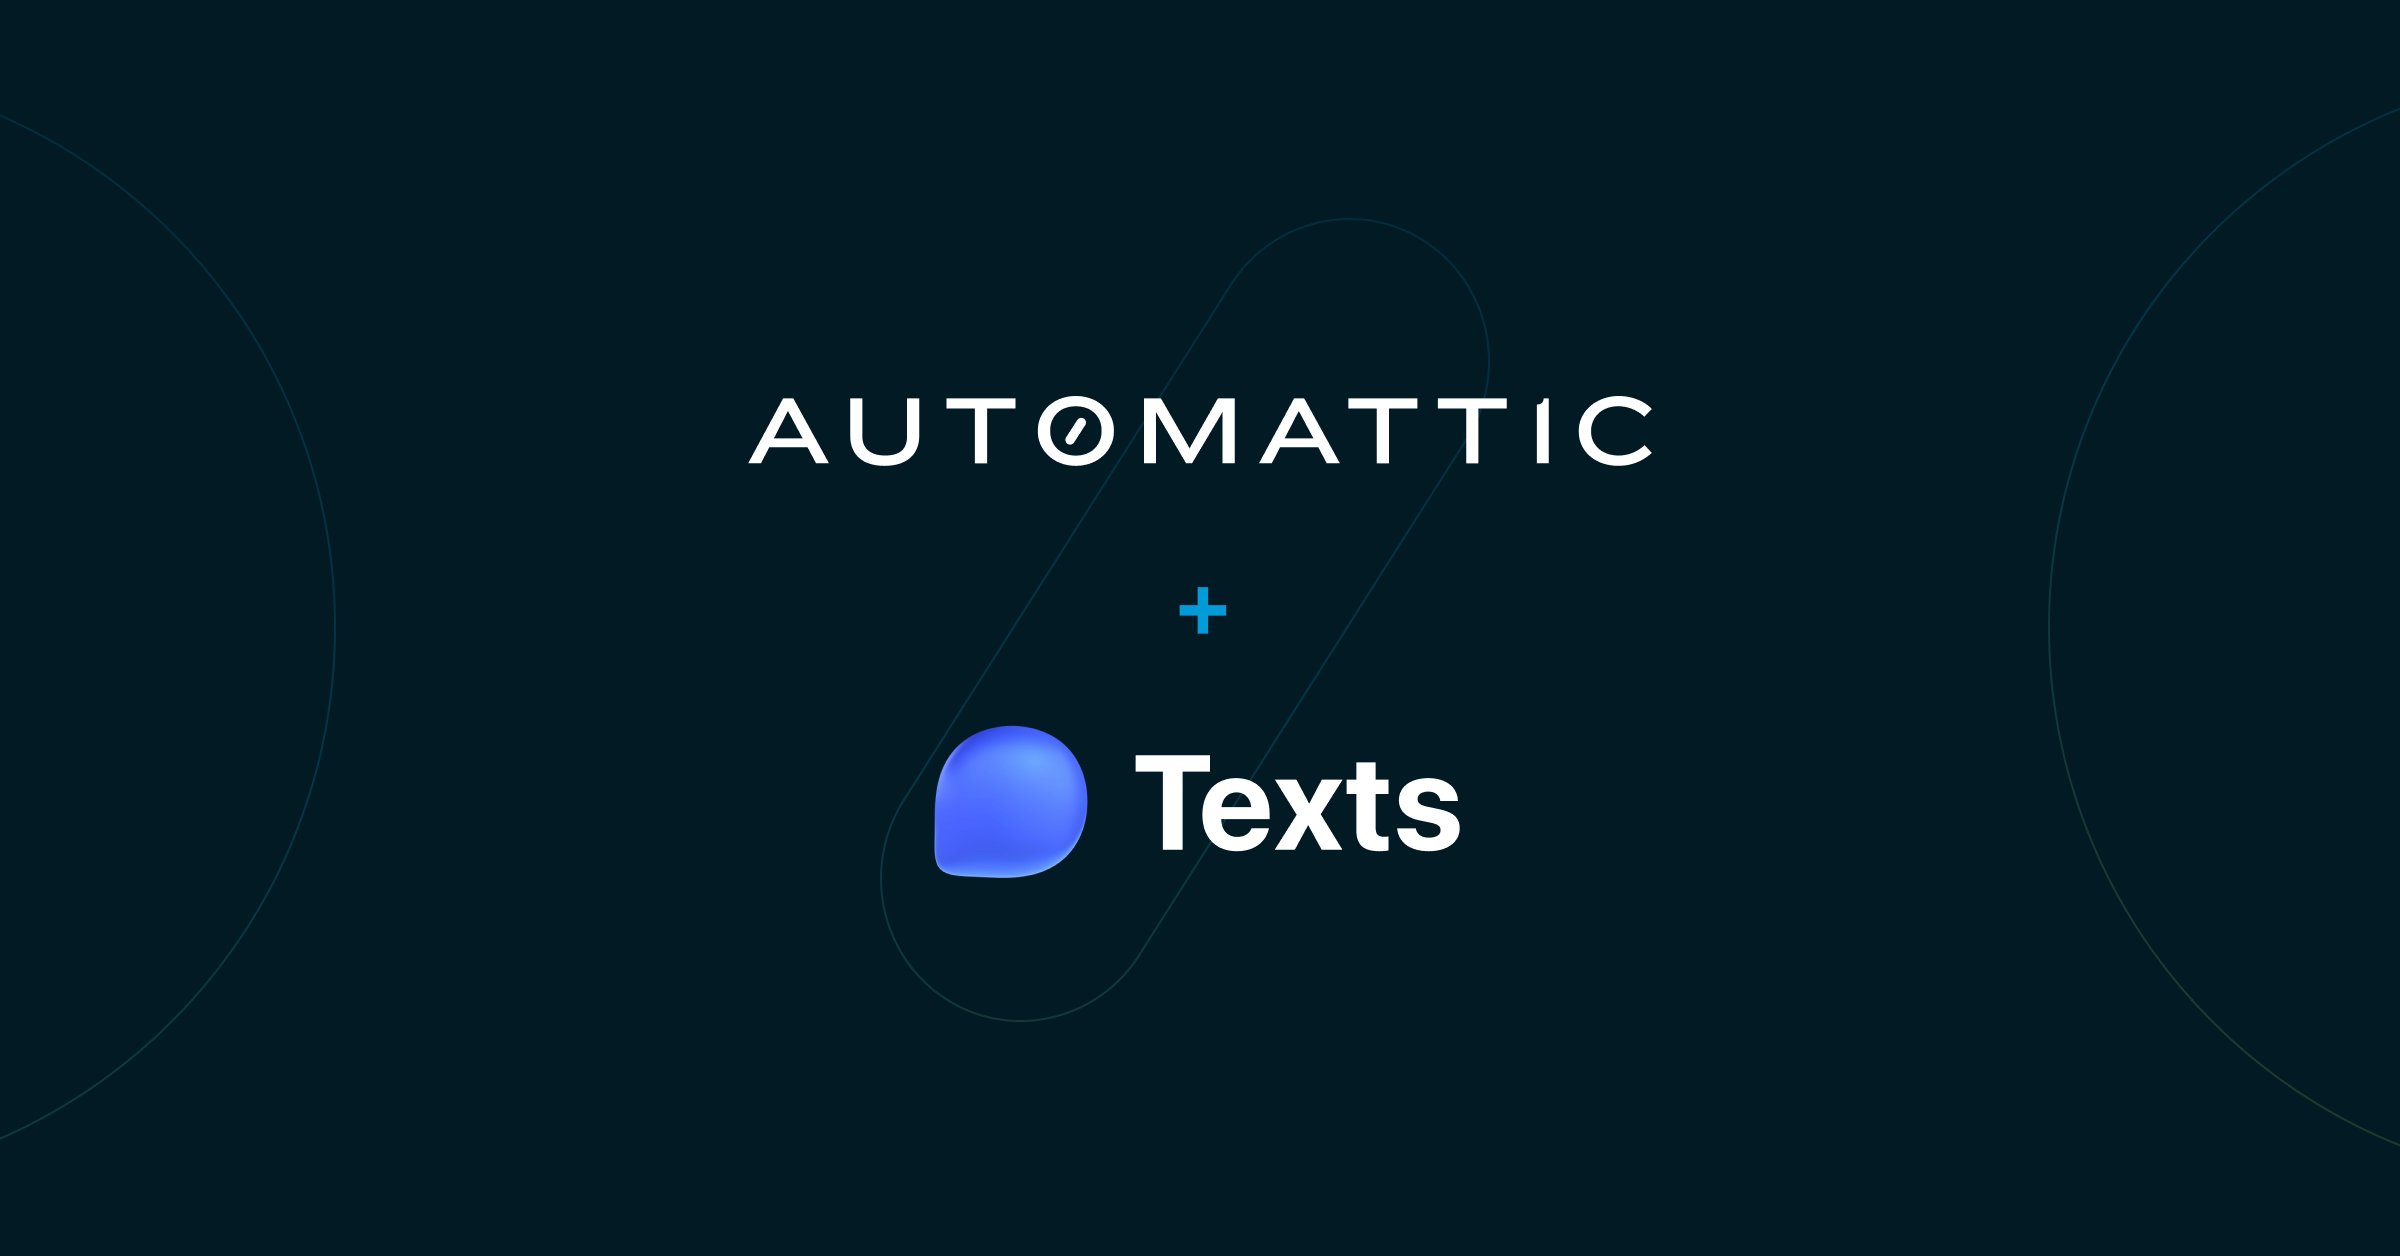 Automattic Acquires Texts.com For $50M, Expanding Its App Portfolio